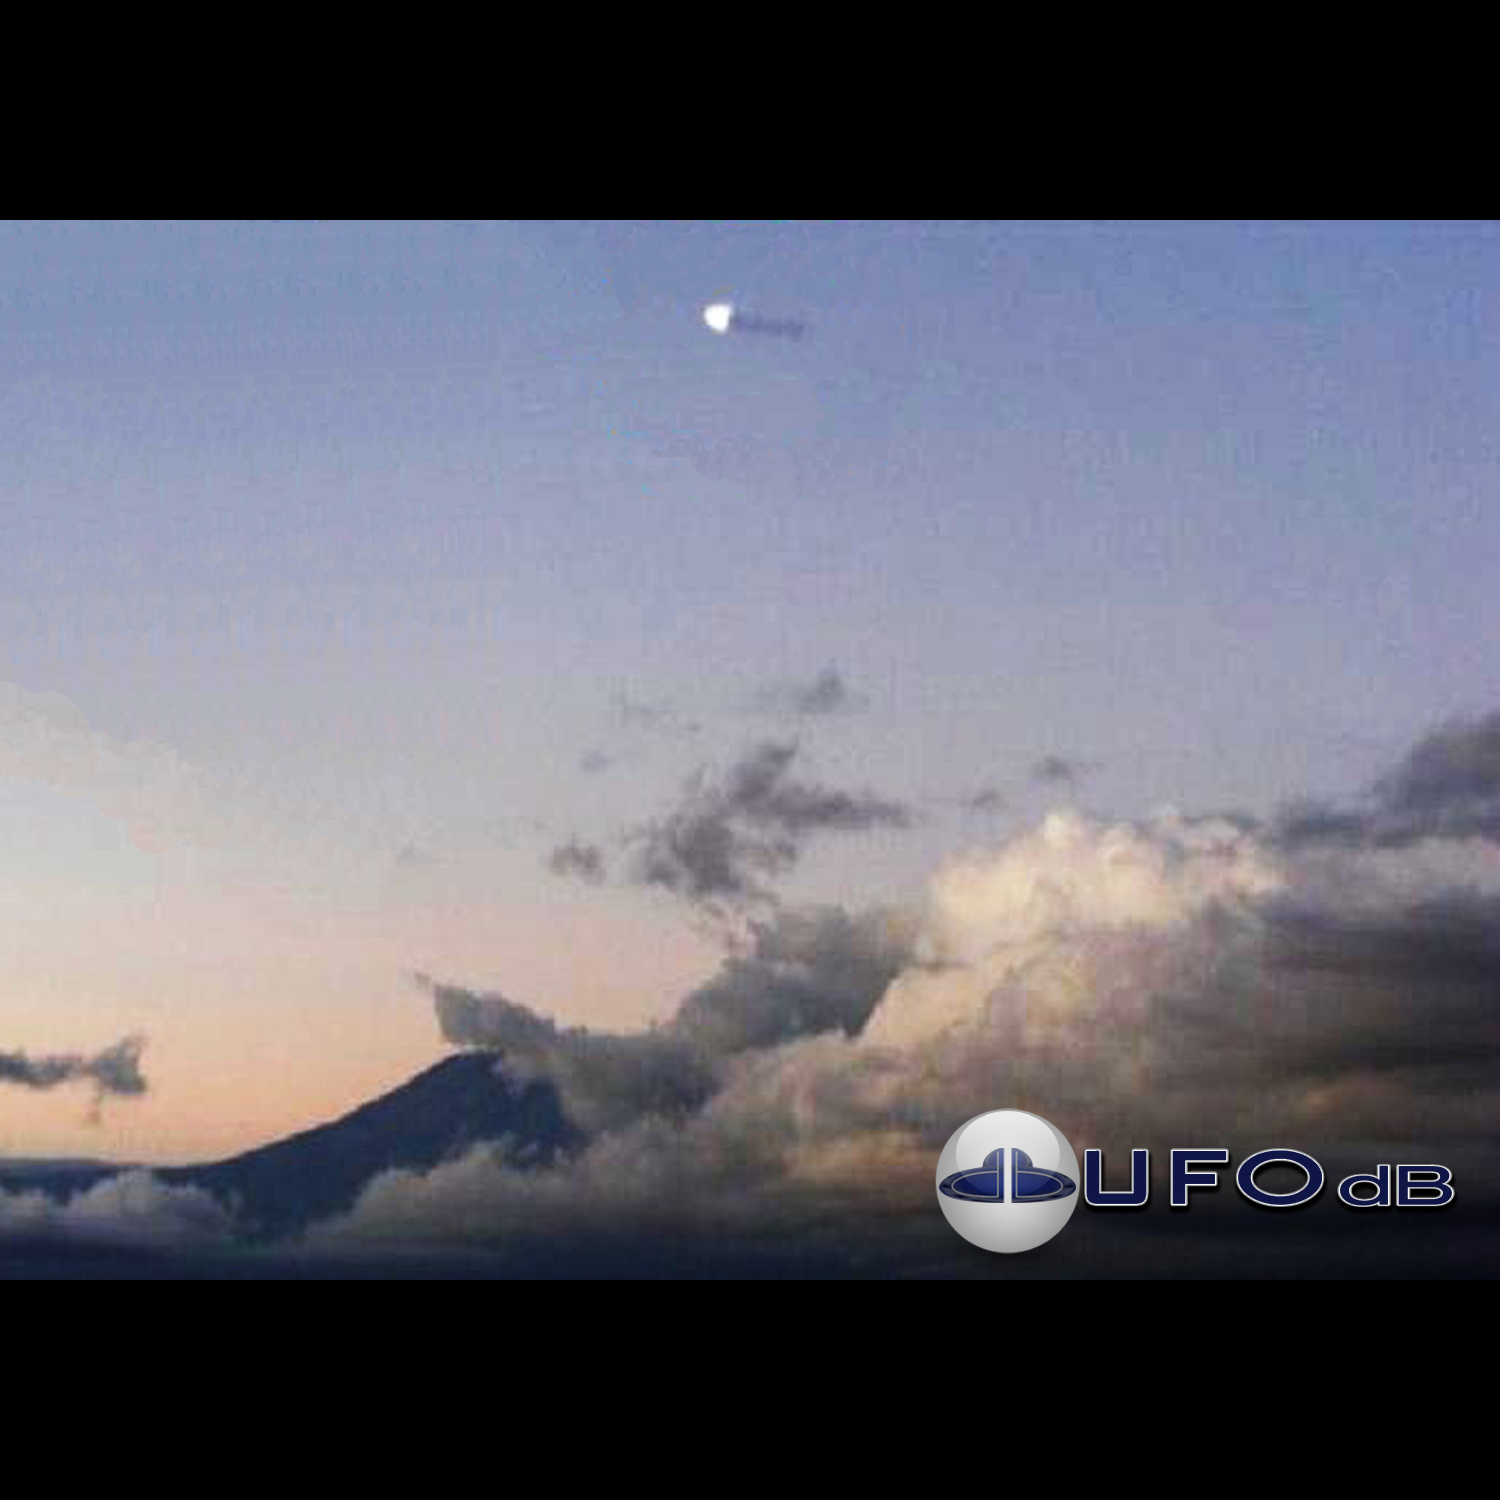 Long Mothership UFO near Africa Mount Kilimanjaro Kenya | June 6 2009 UFO Picture #233-1